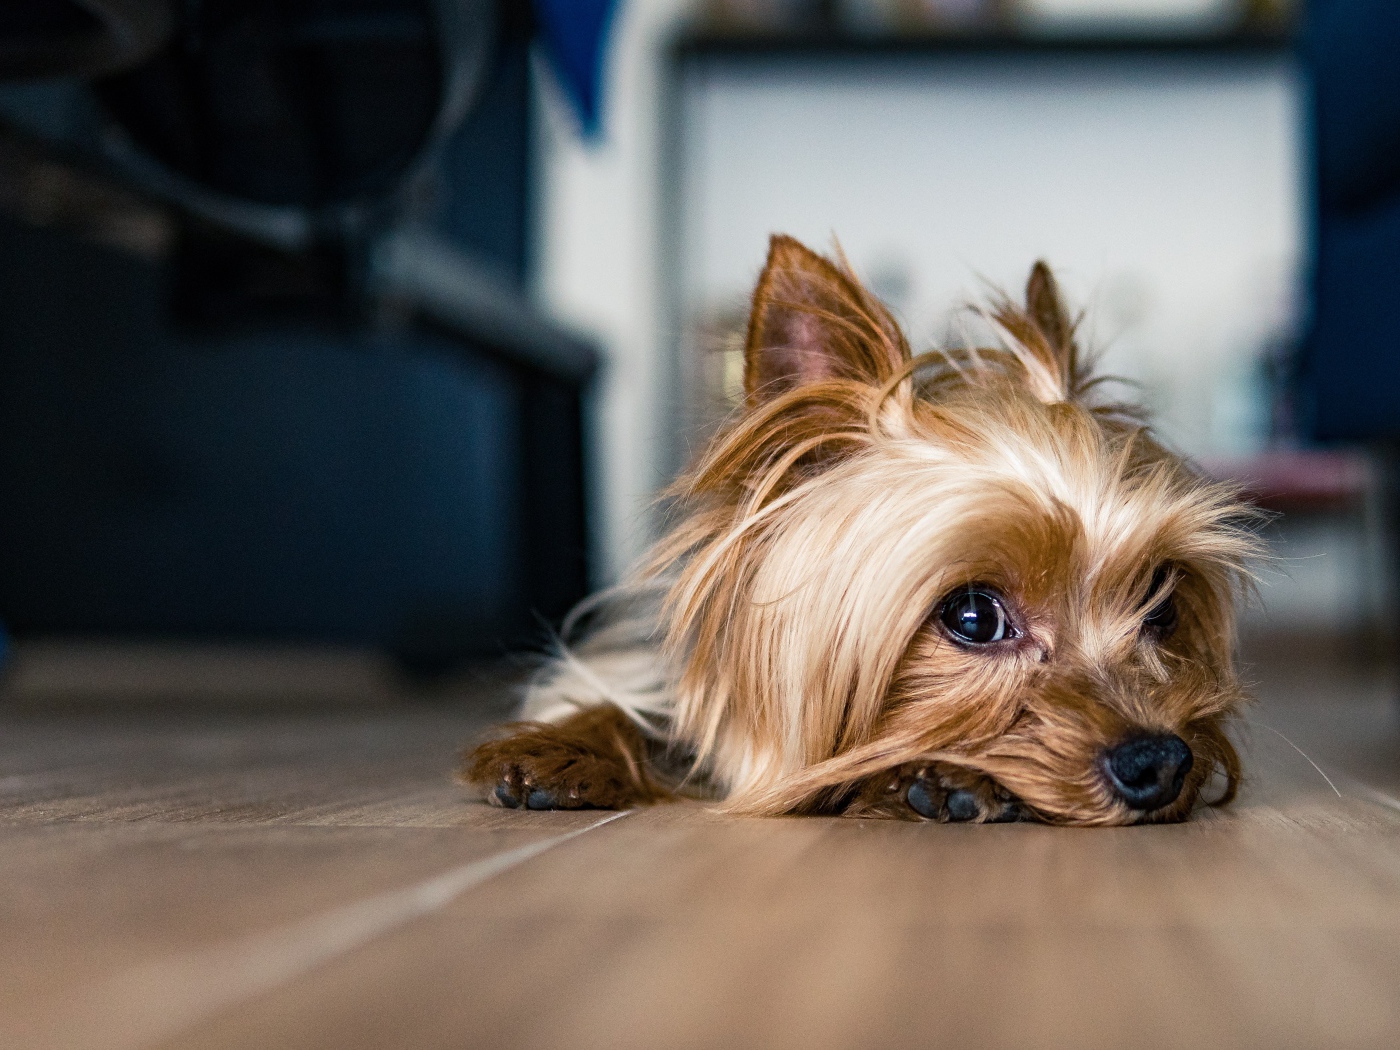 Sad yorkshire terrier on the floor